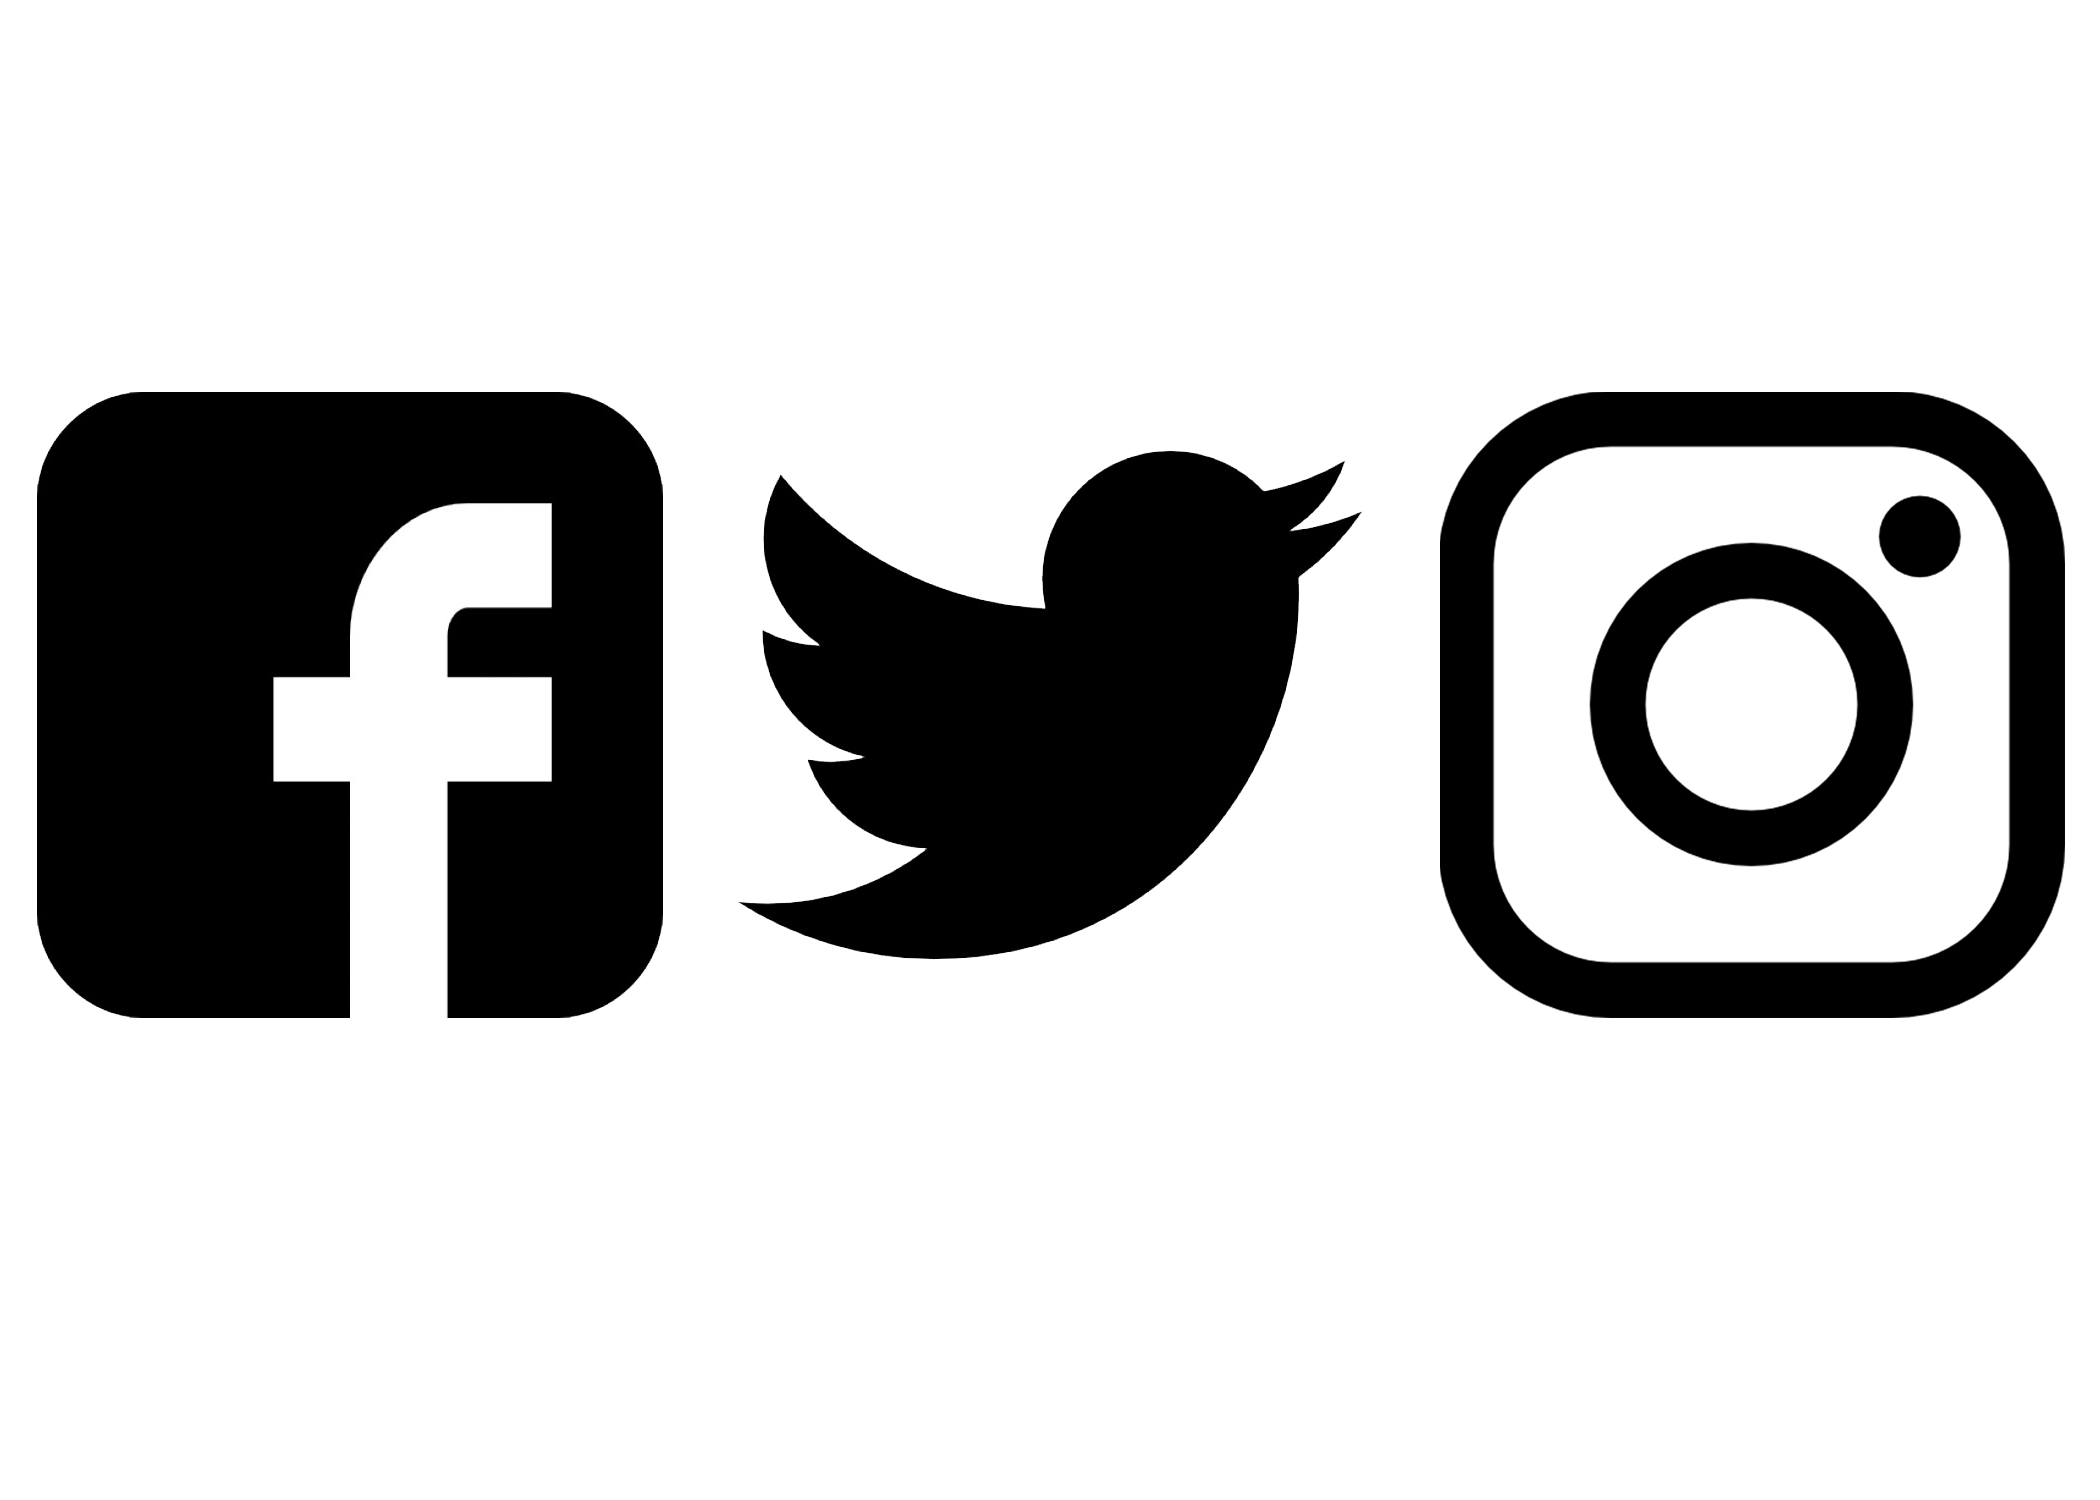 social media logo black and white png